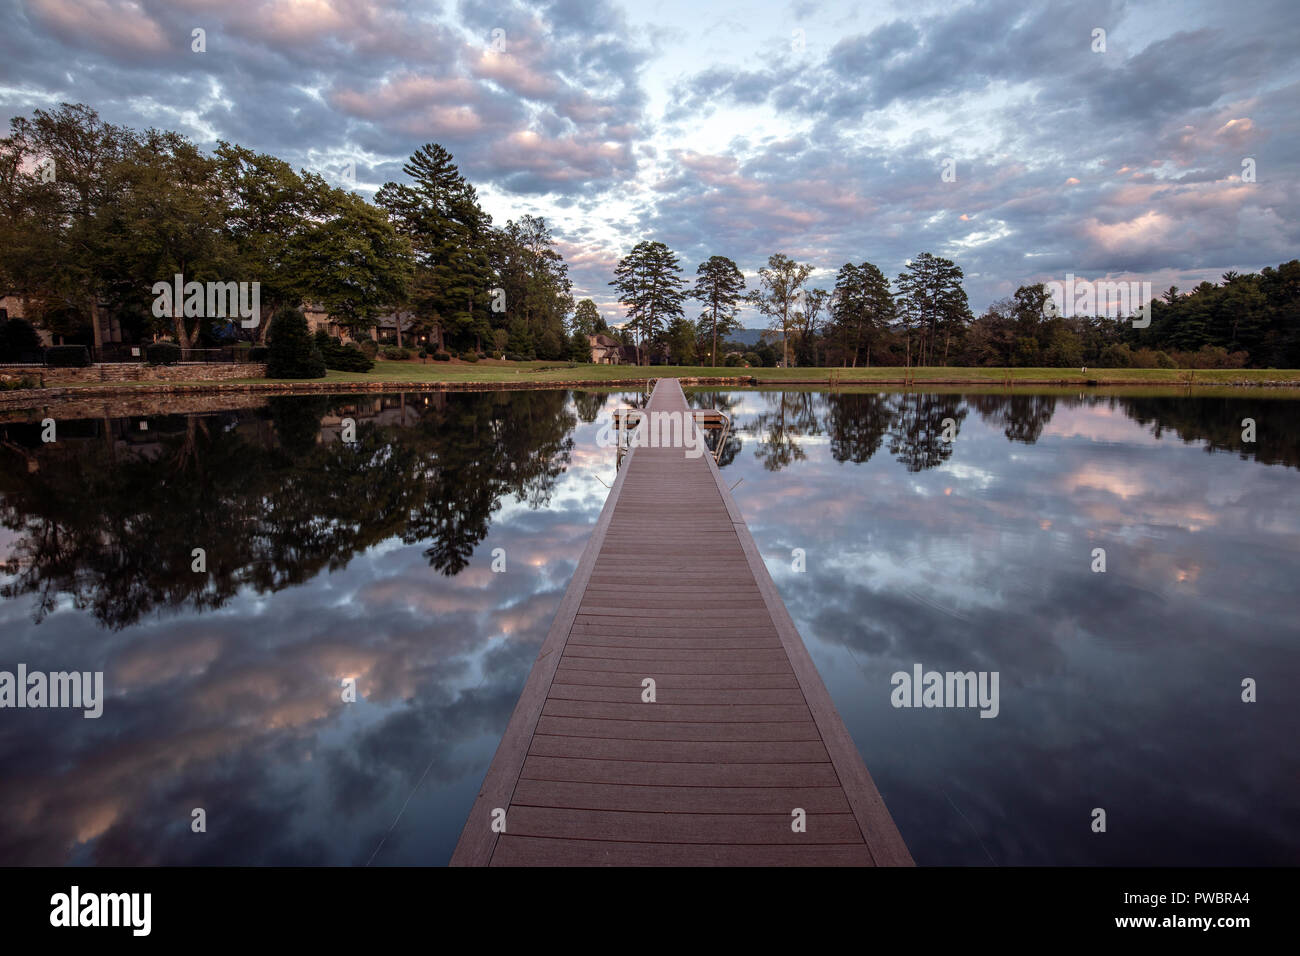 Straus See Reflexionen bei Sonnenuntergang - Brevard, North Carolina, USA Stockfoto